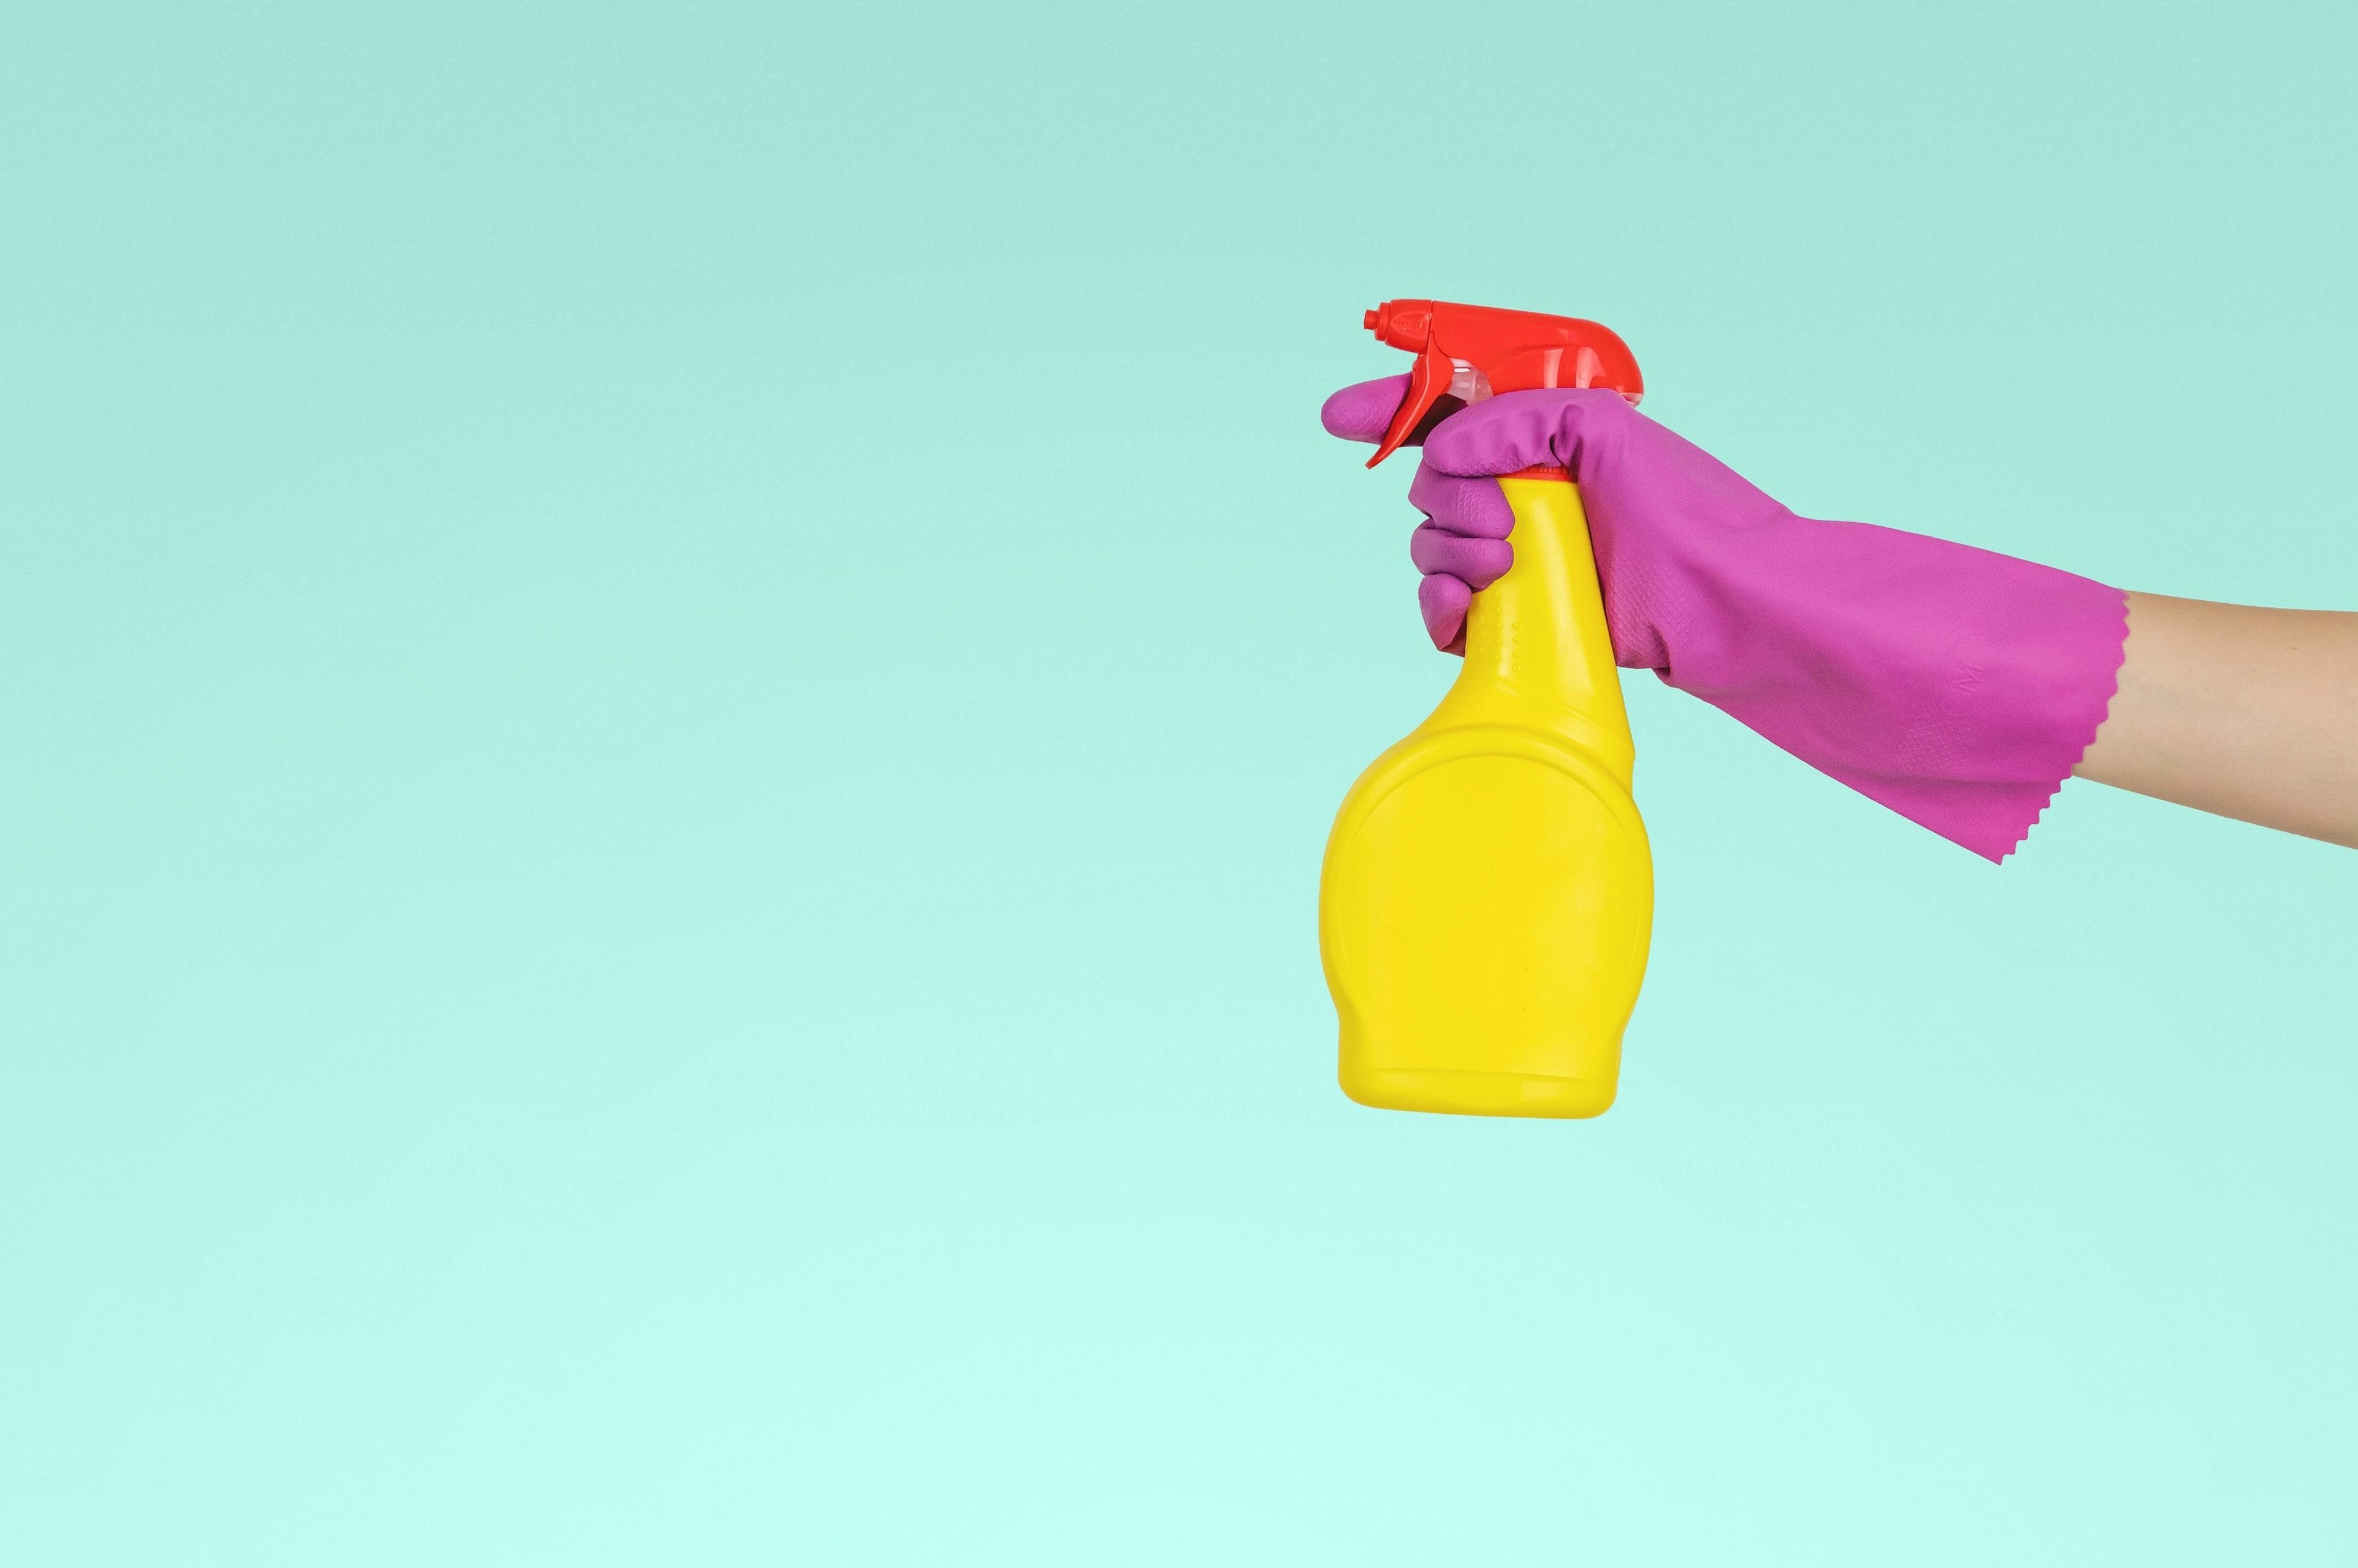 Hand in rubber glove holding a spray bottle of bleach